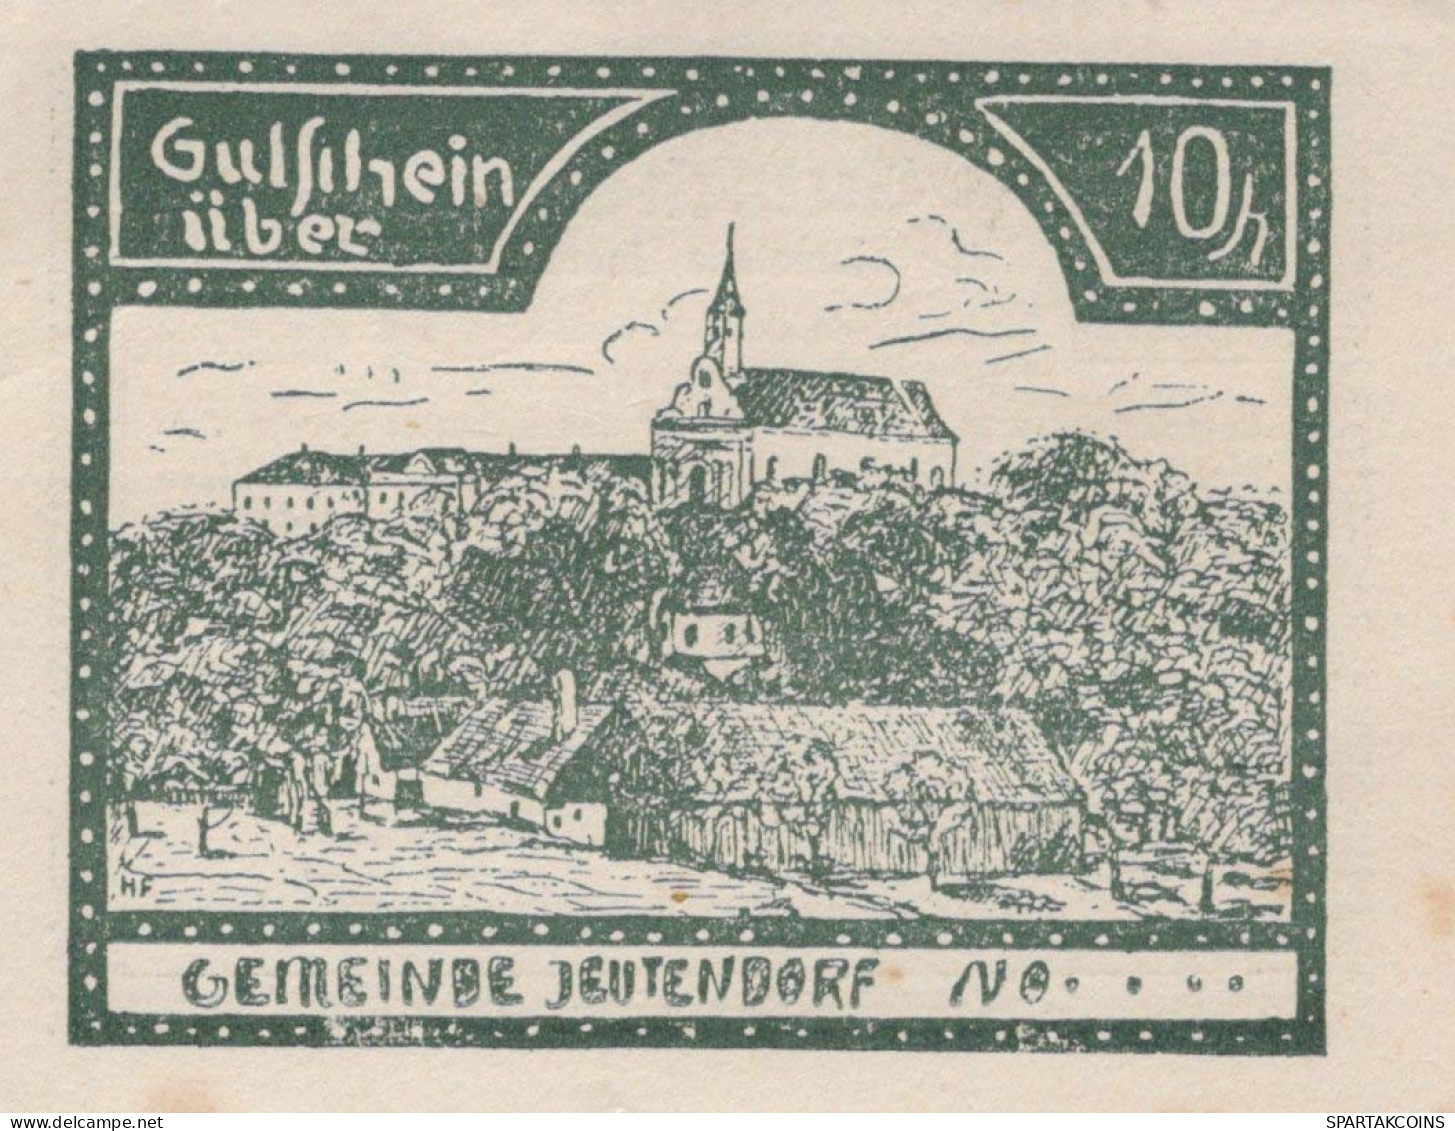 10 HELLER 1920 Stadt JEUTENDORF Niedrigeren Österreich Notgeld #PD634 - [11] Lokale Uitgaven